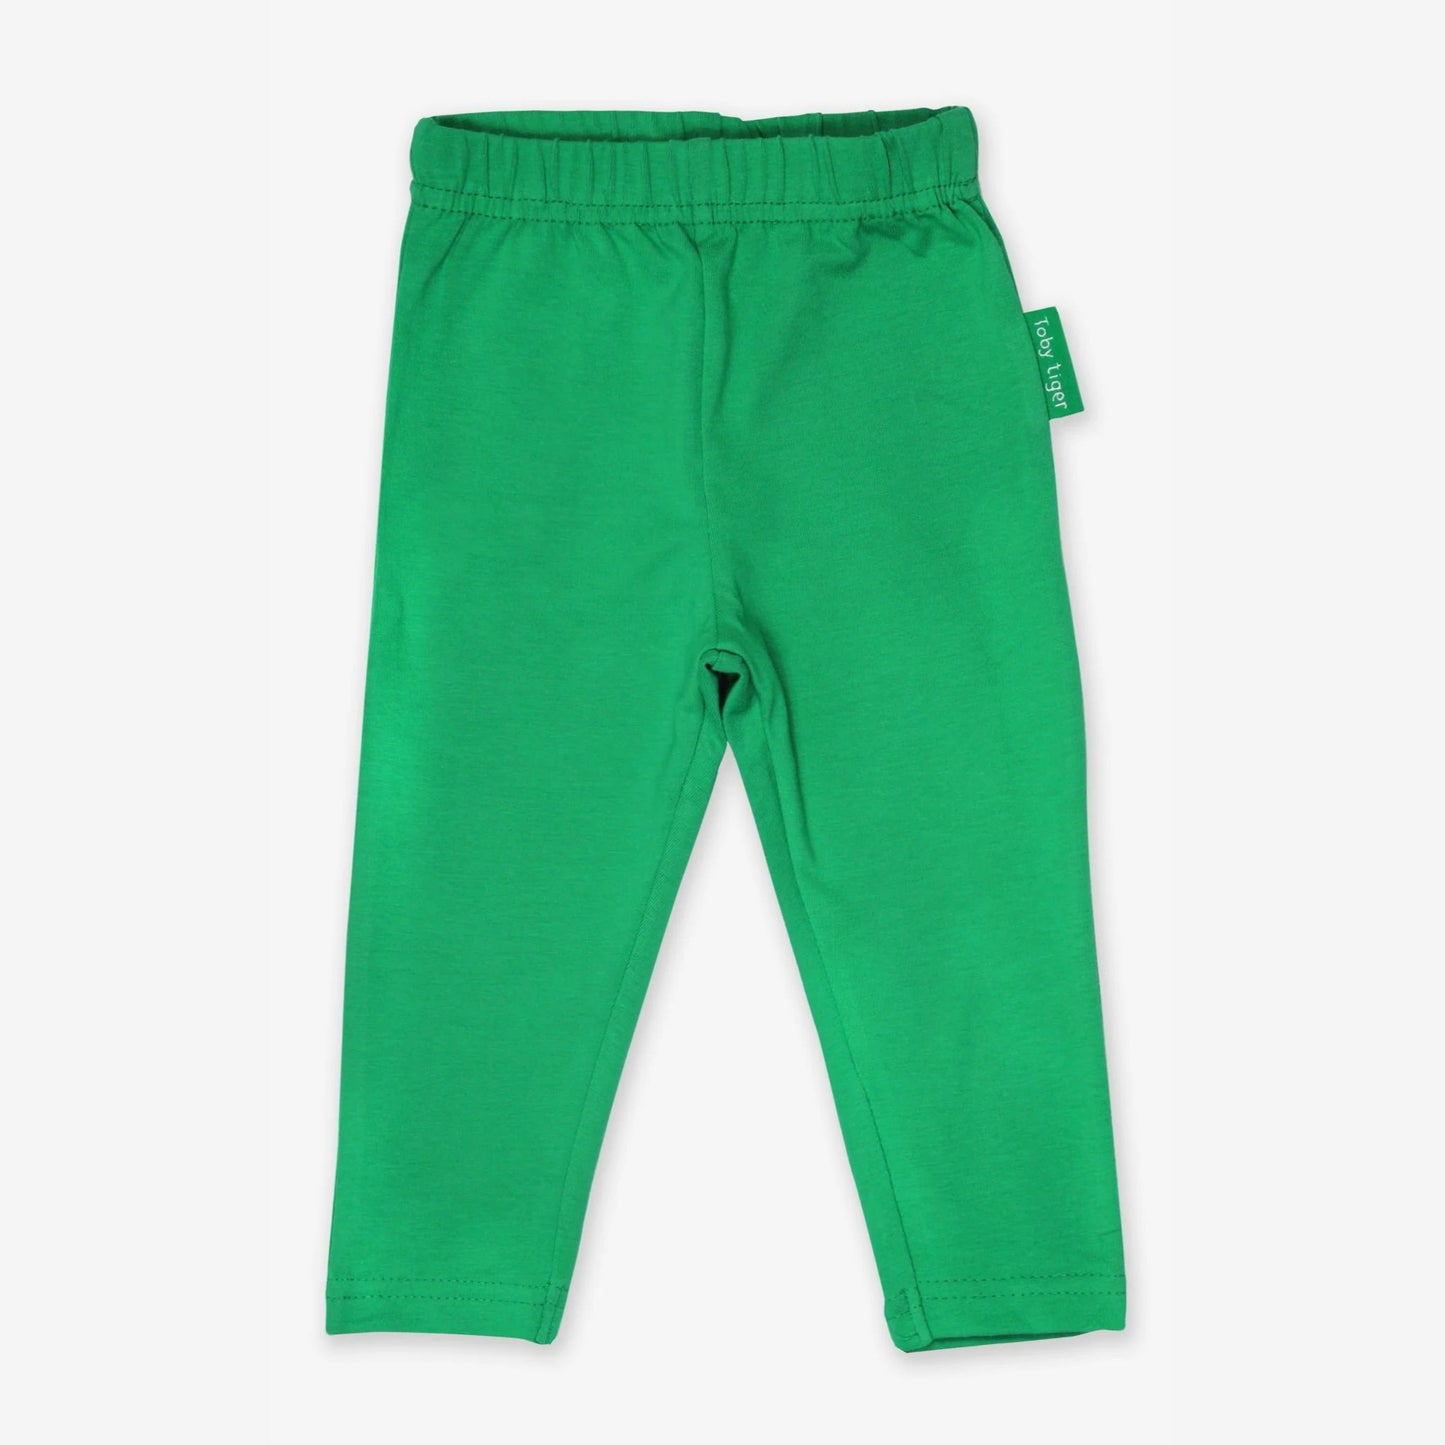 Toby Tiger leggings - green - sale